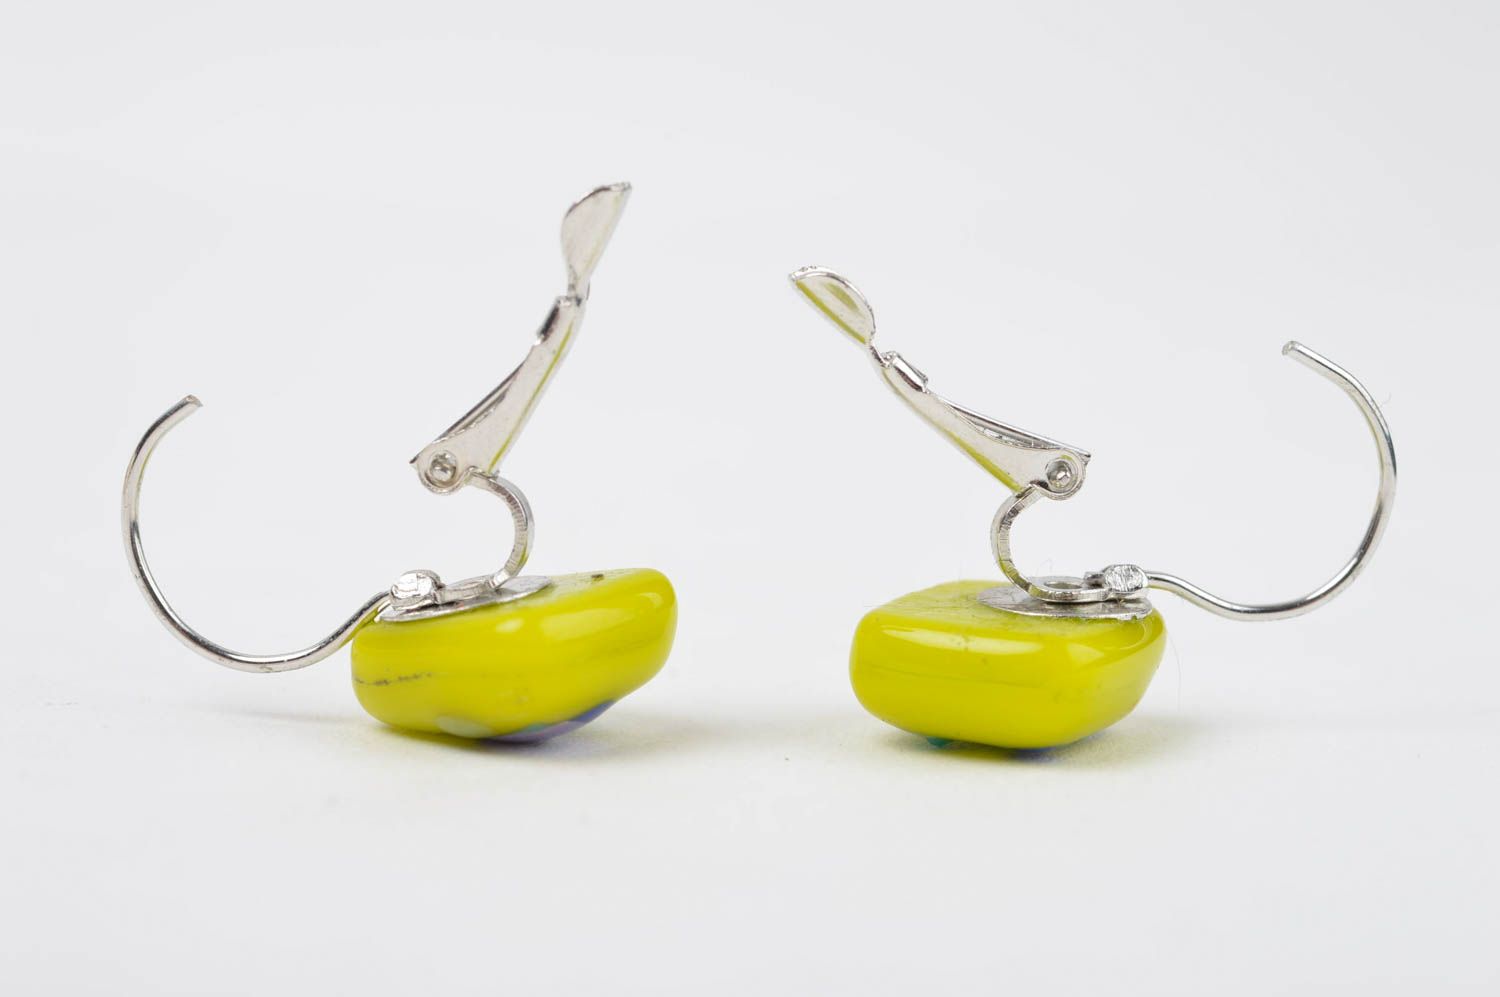 Unusual handmade glass earrings fashion accessories artisan jewelry gift ideas photo 4